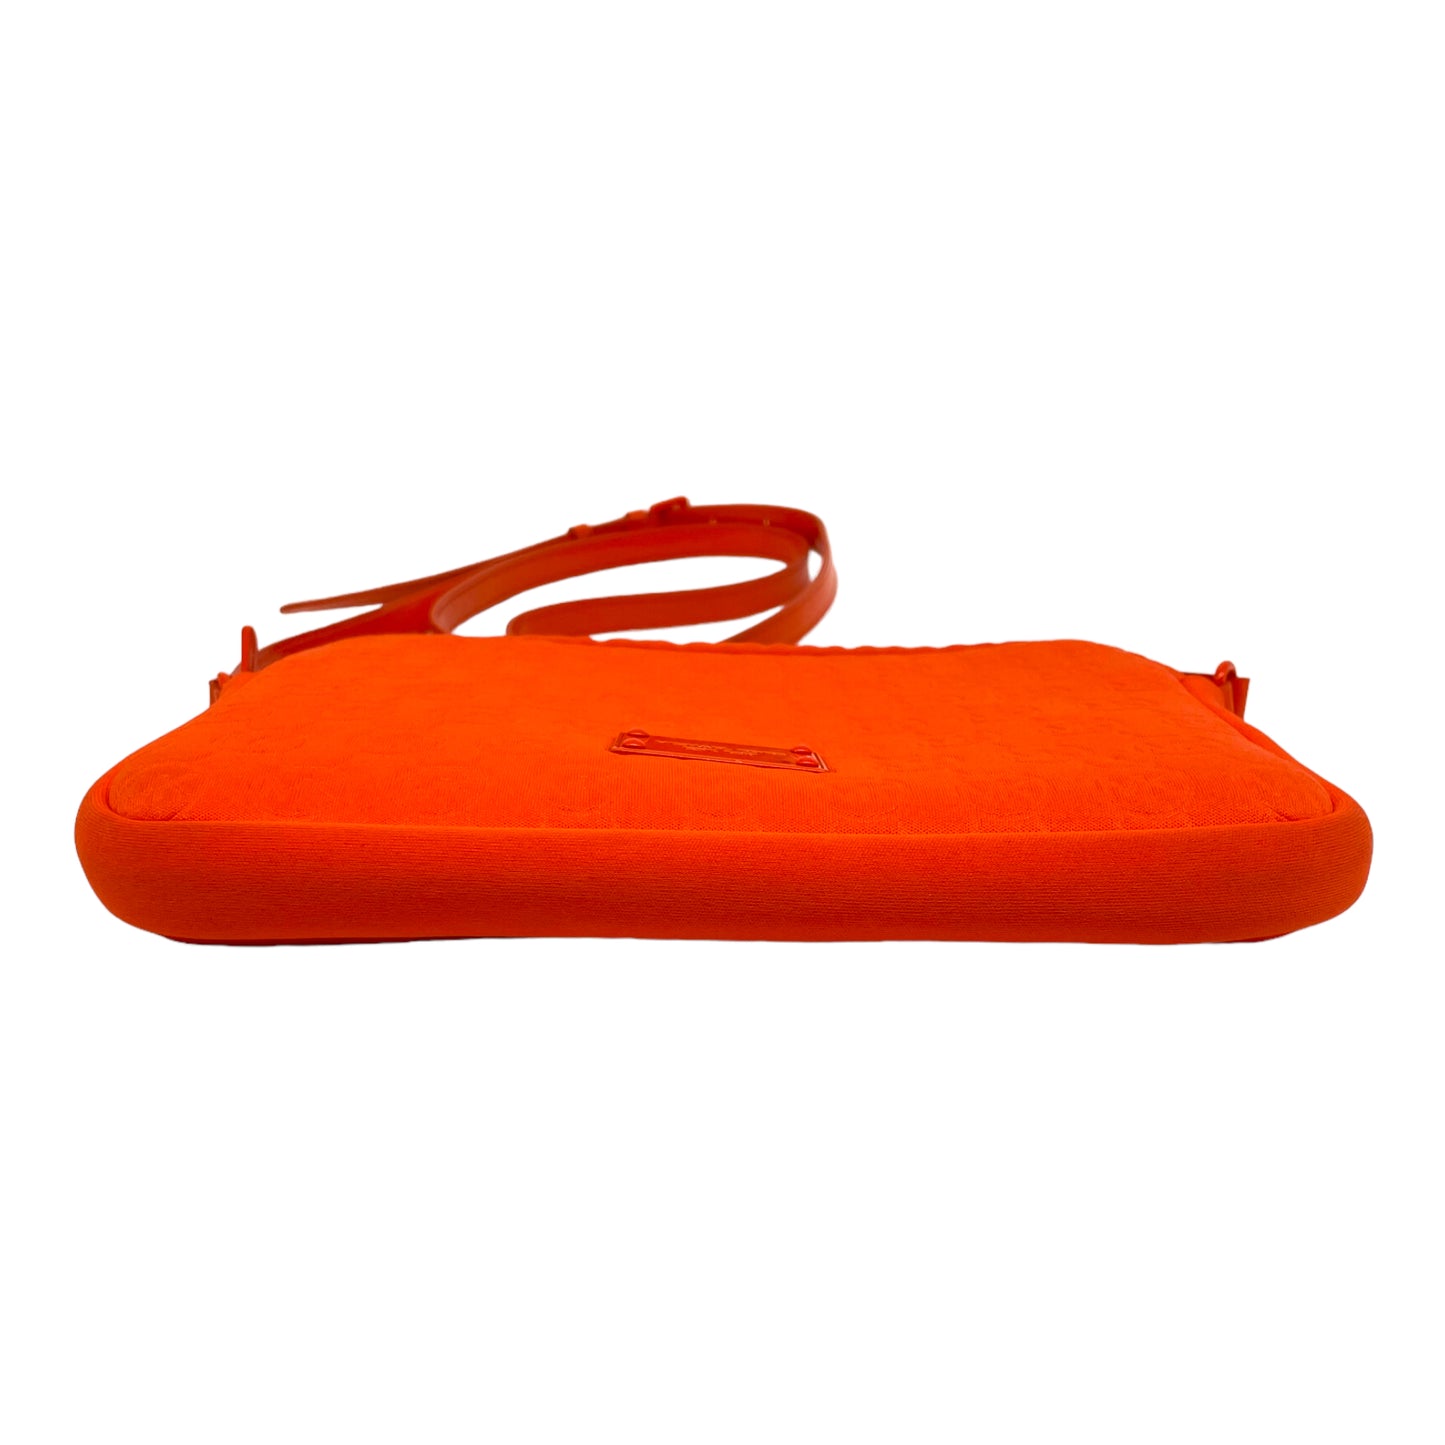 Michael Kors Orange Tech Accessory Bag